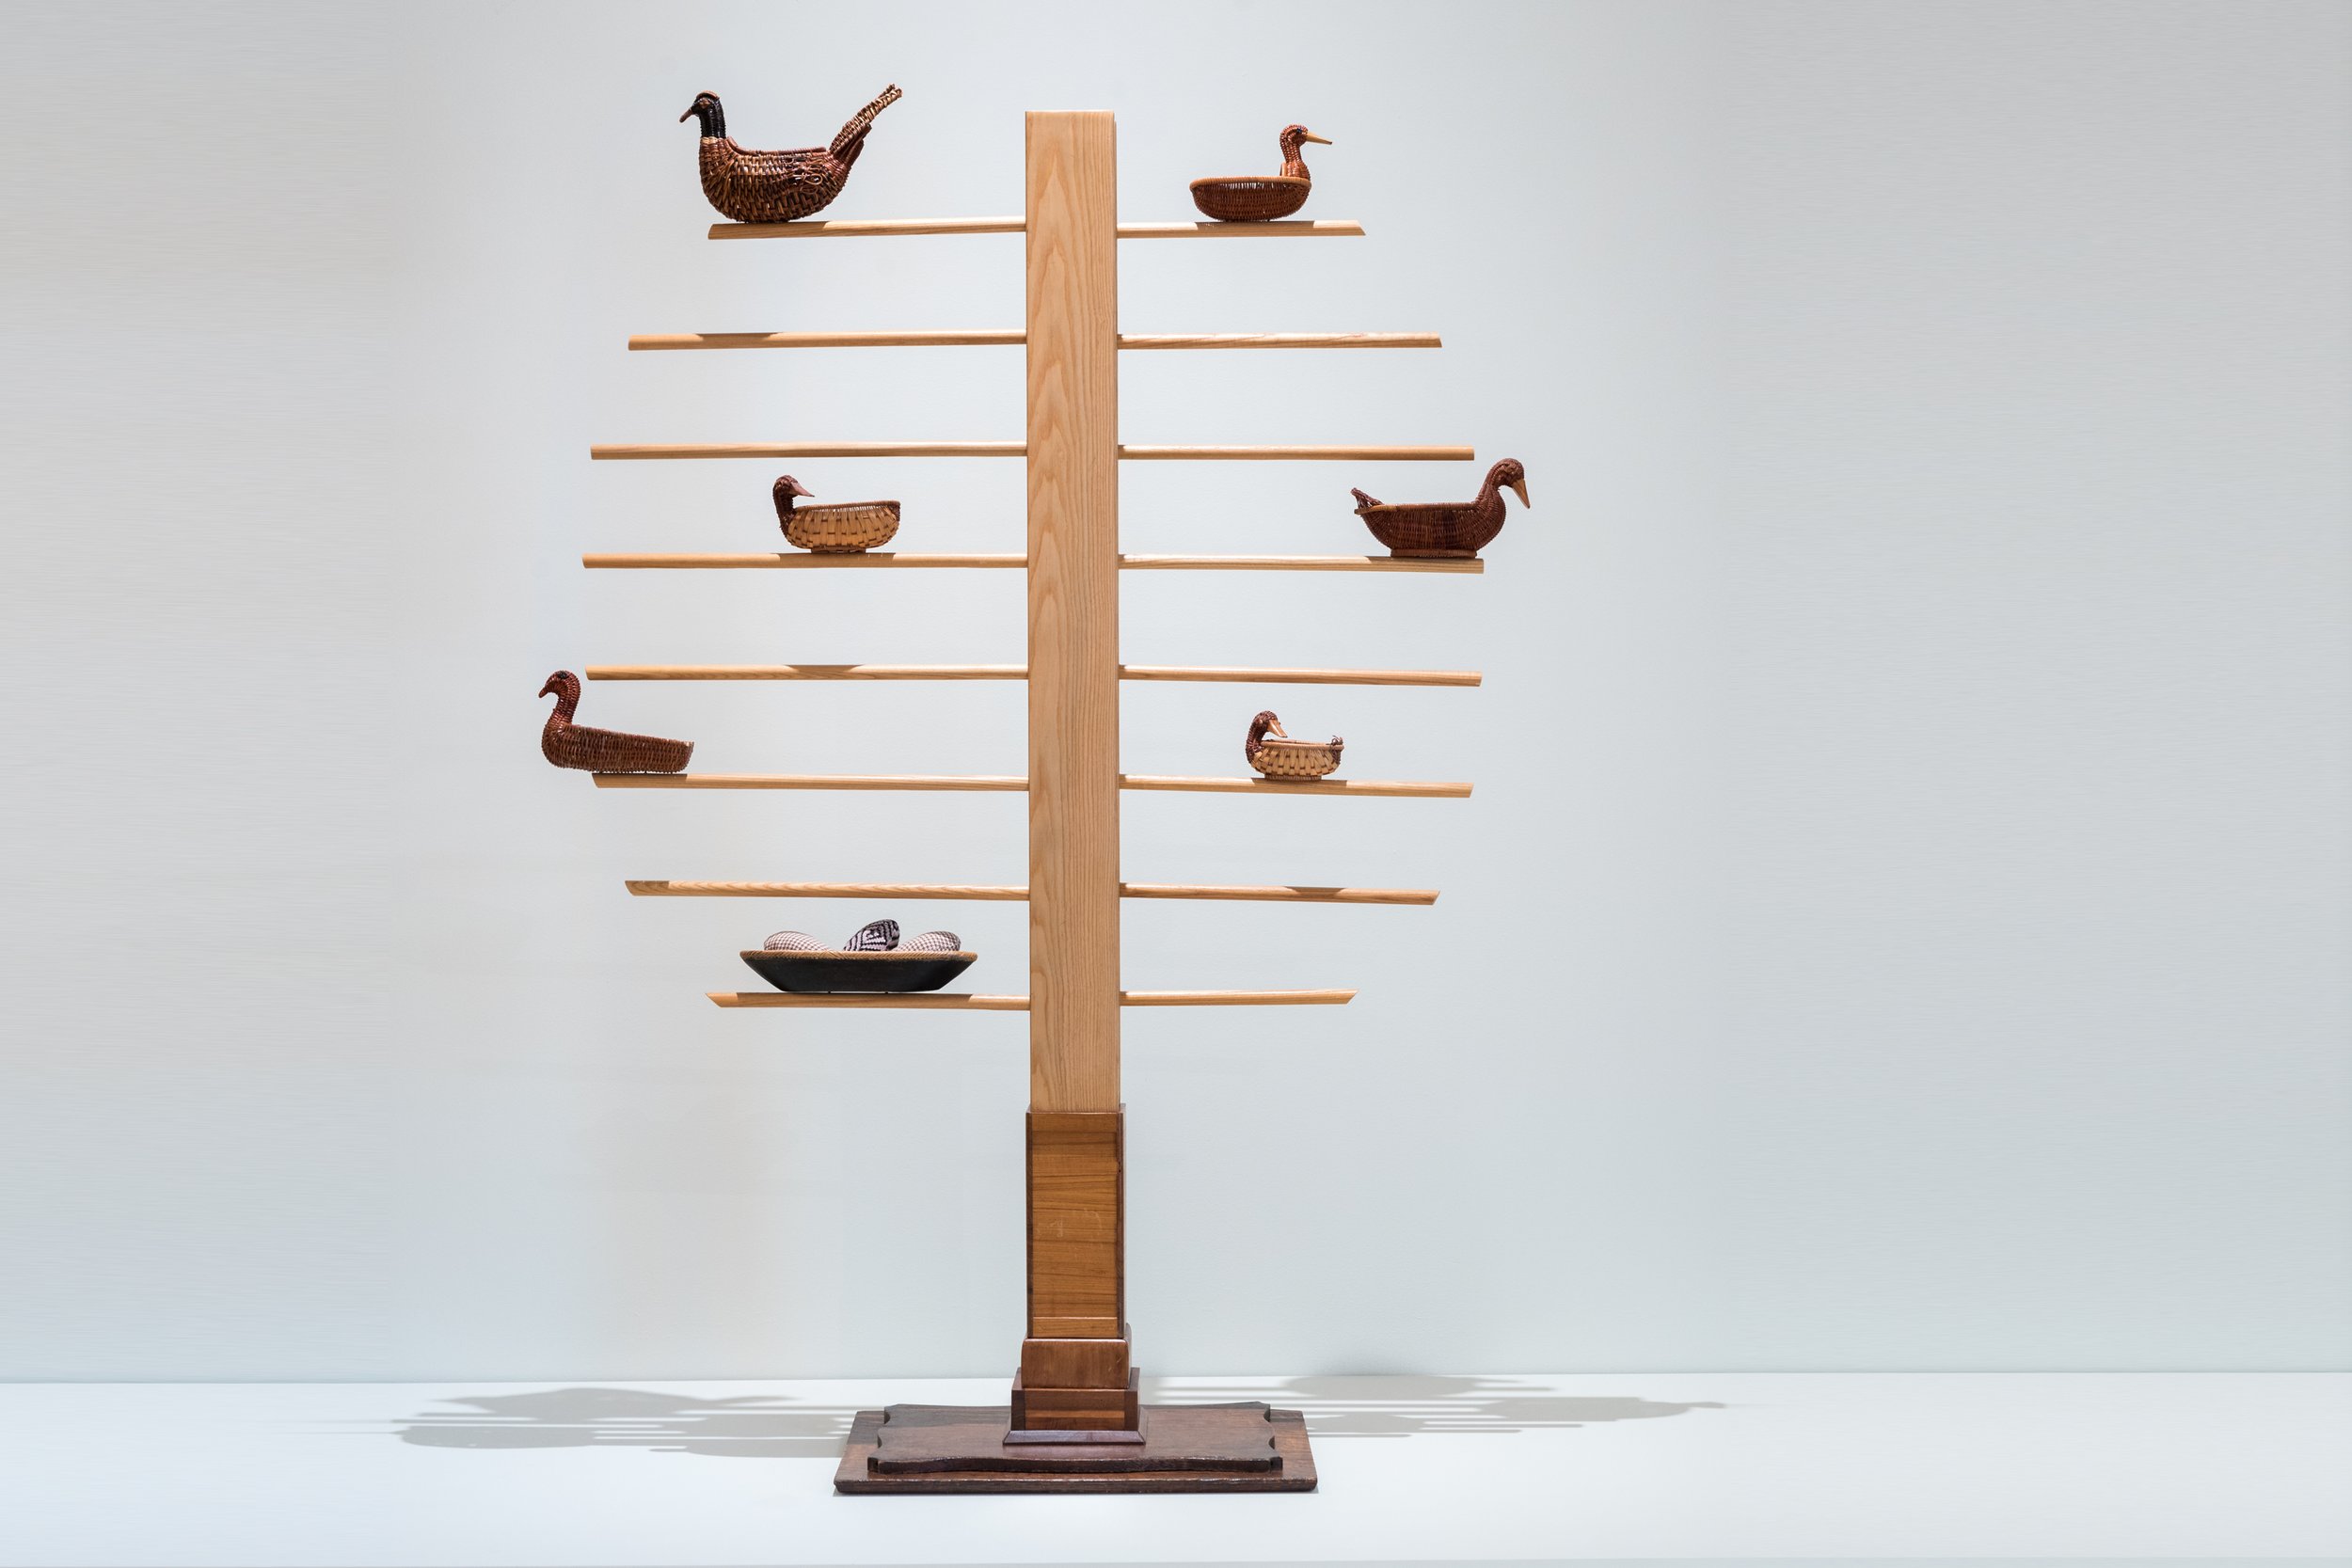  Tree Of Life Reclaimed wood, wicker and fabric 75” x 56” x 19” Philadelphia Museum of Art 2015 